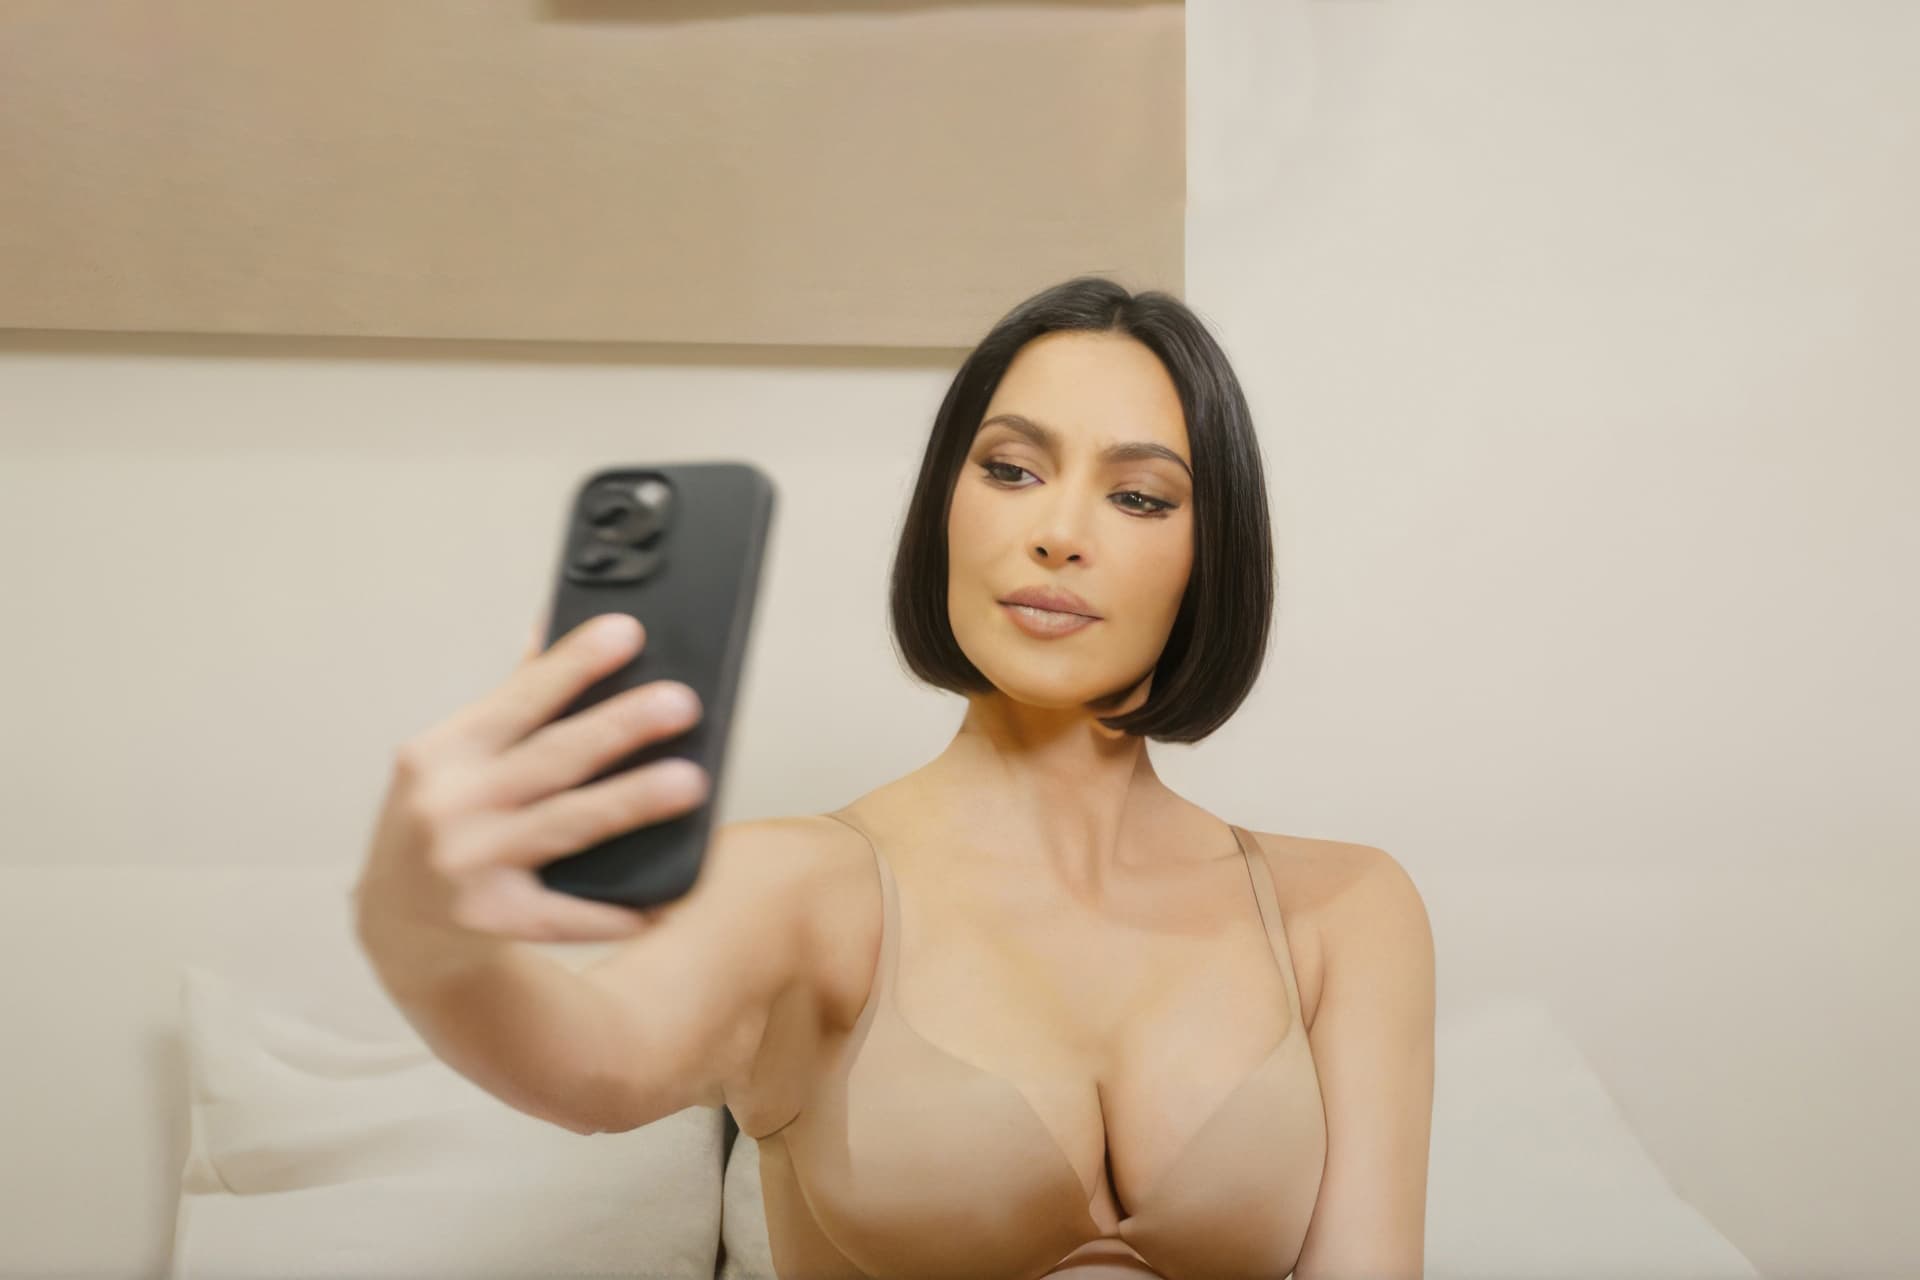 Kim Kardashian teases new SKIMS bra launch coming soon - Delta Daily News